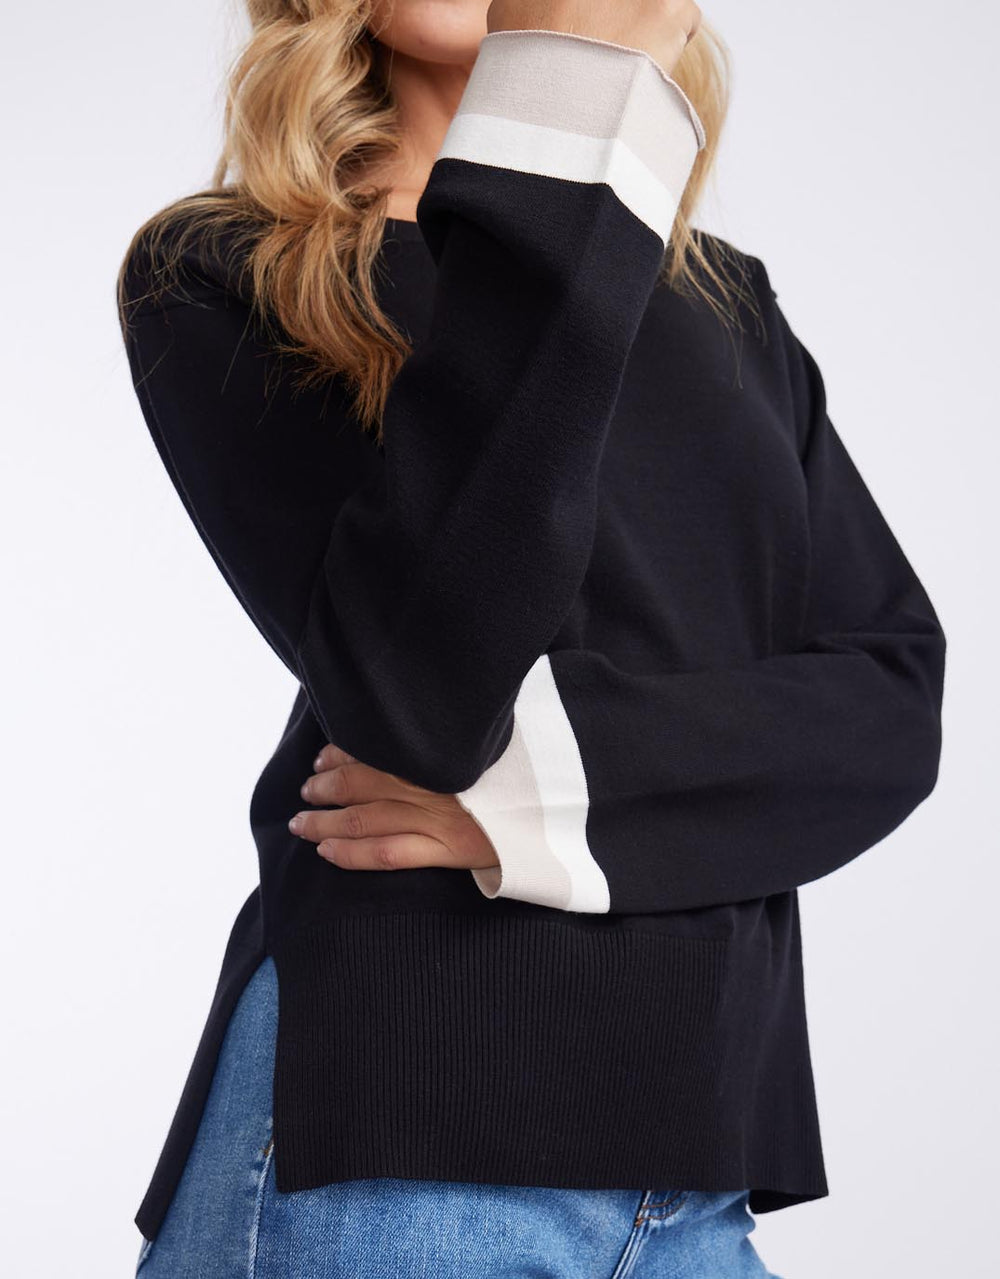 paulaglazebrook. - Giselle Lightweight Knit Top - Black/Oat/White - paulaglazebrook Knitwear